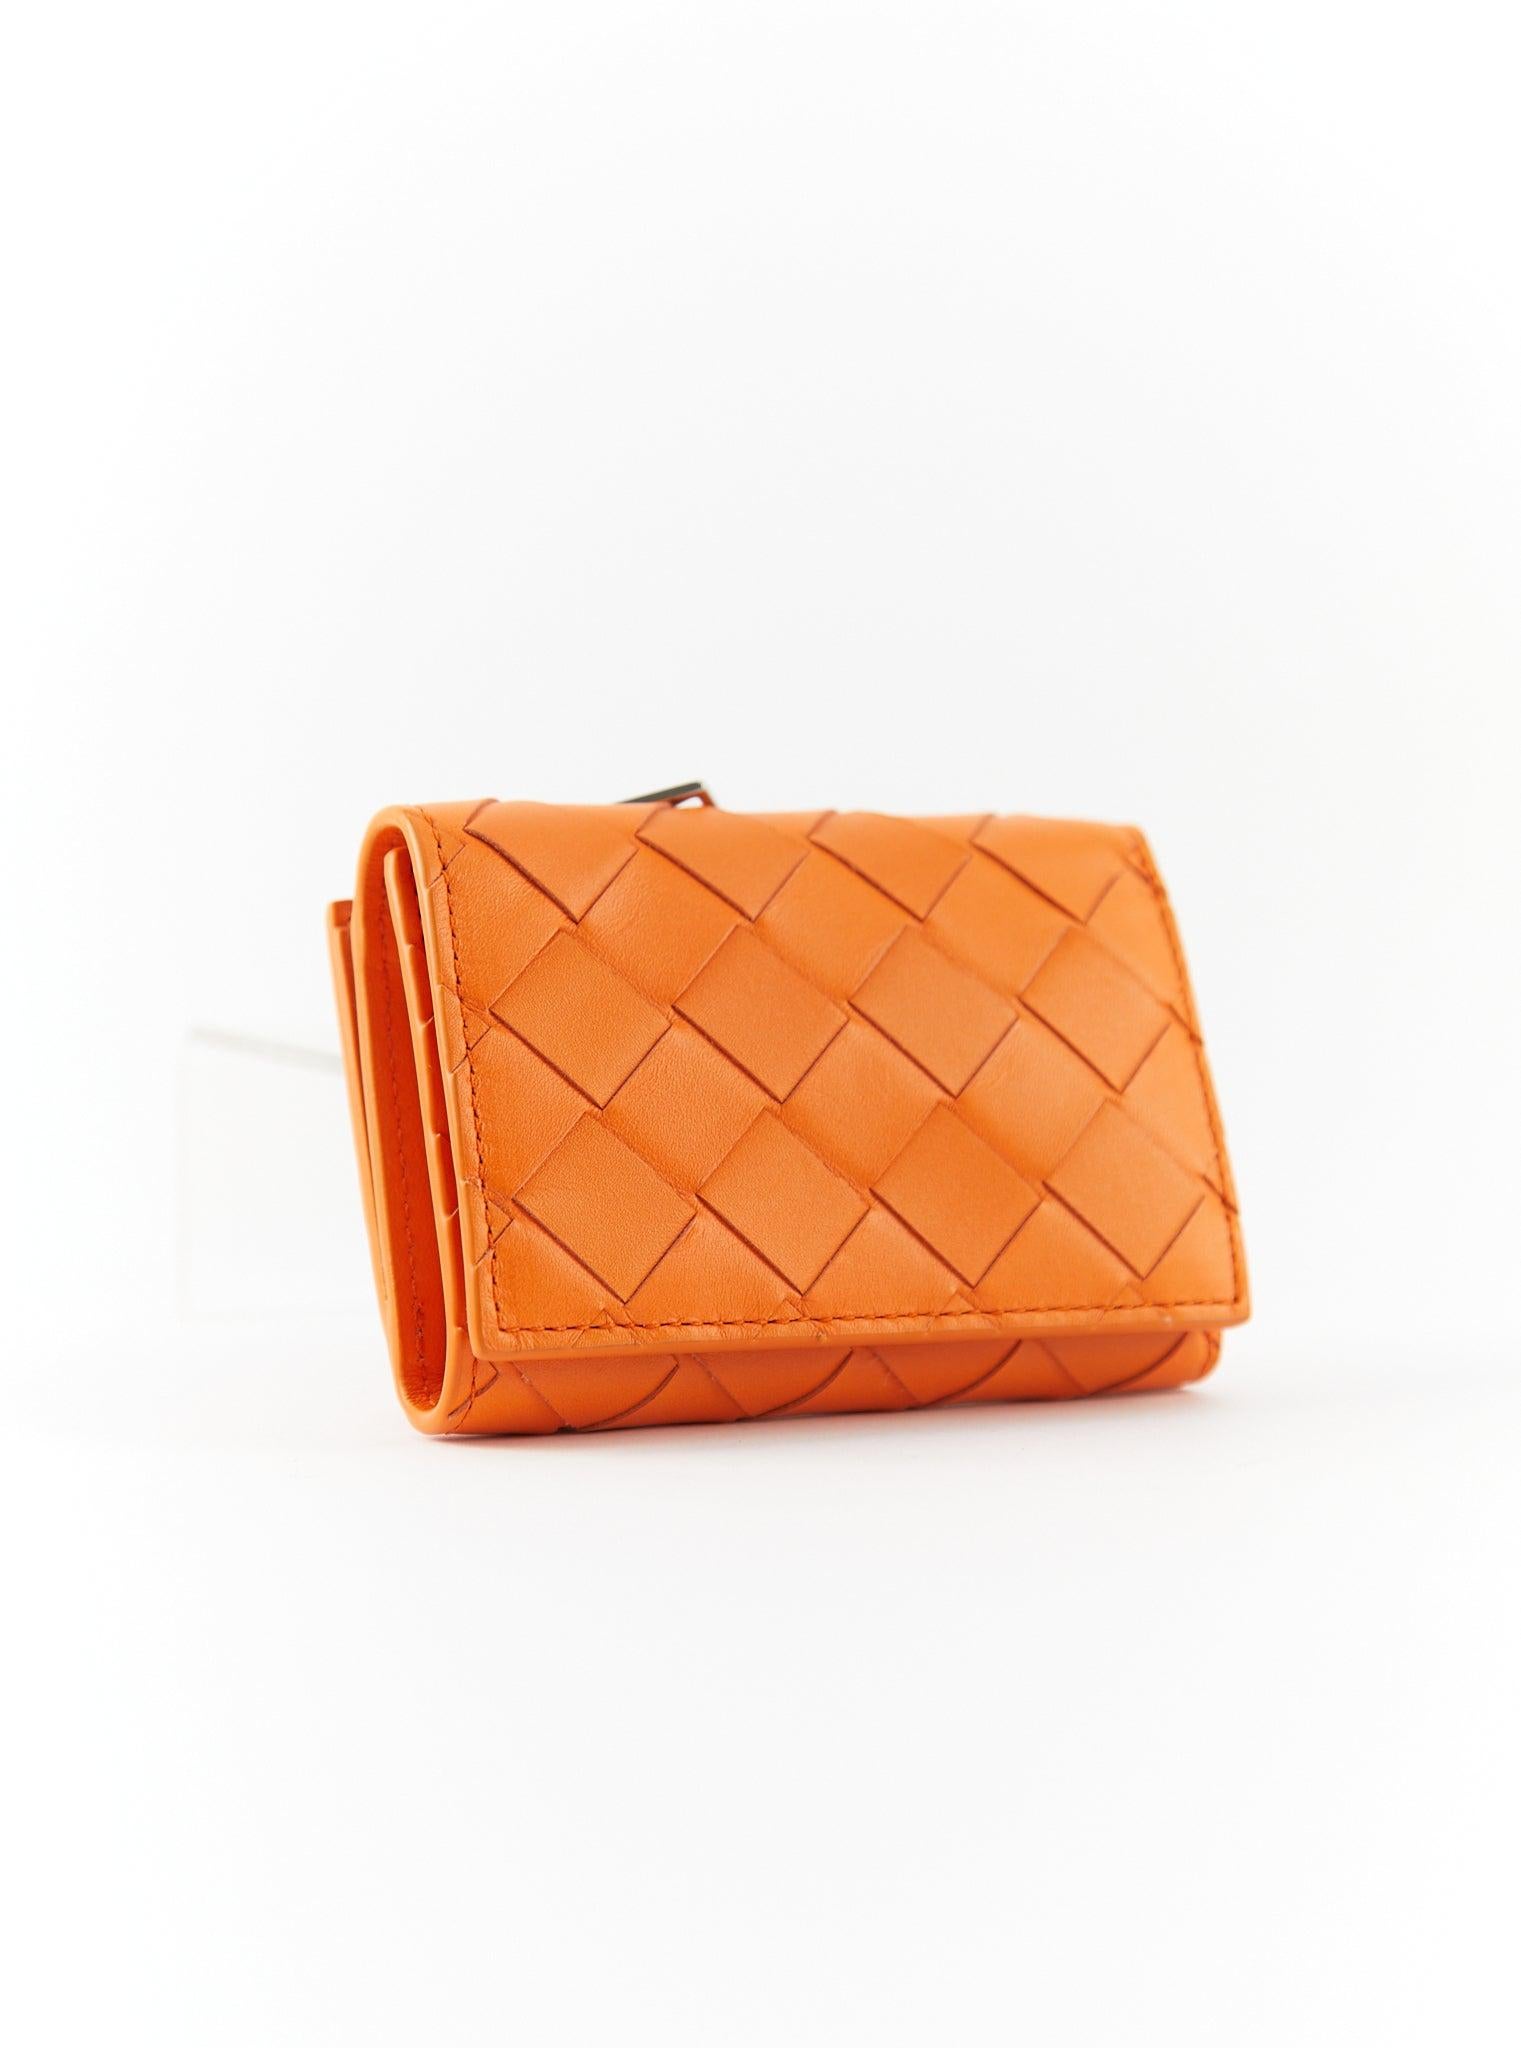 Bottega Tiny Intrecciato Tri-Fold Zip Wallet in Orange

Nappa Leather with Silver-tone Hardware

Dimensions: H 7 x W x 9.5 x D 2.5 cm

Accompanied with original box



